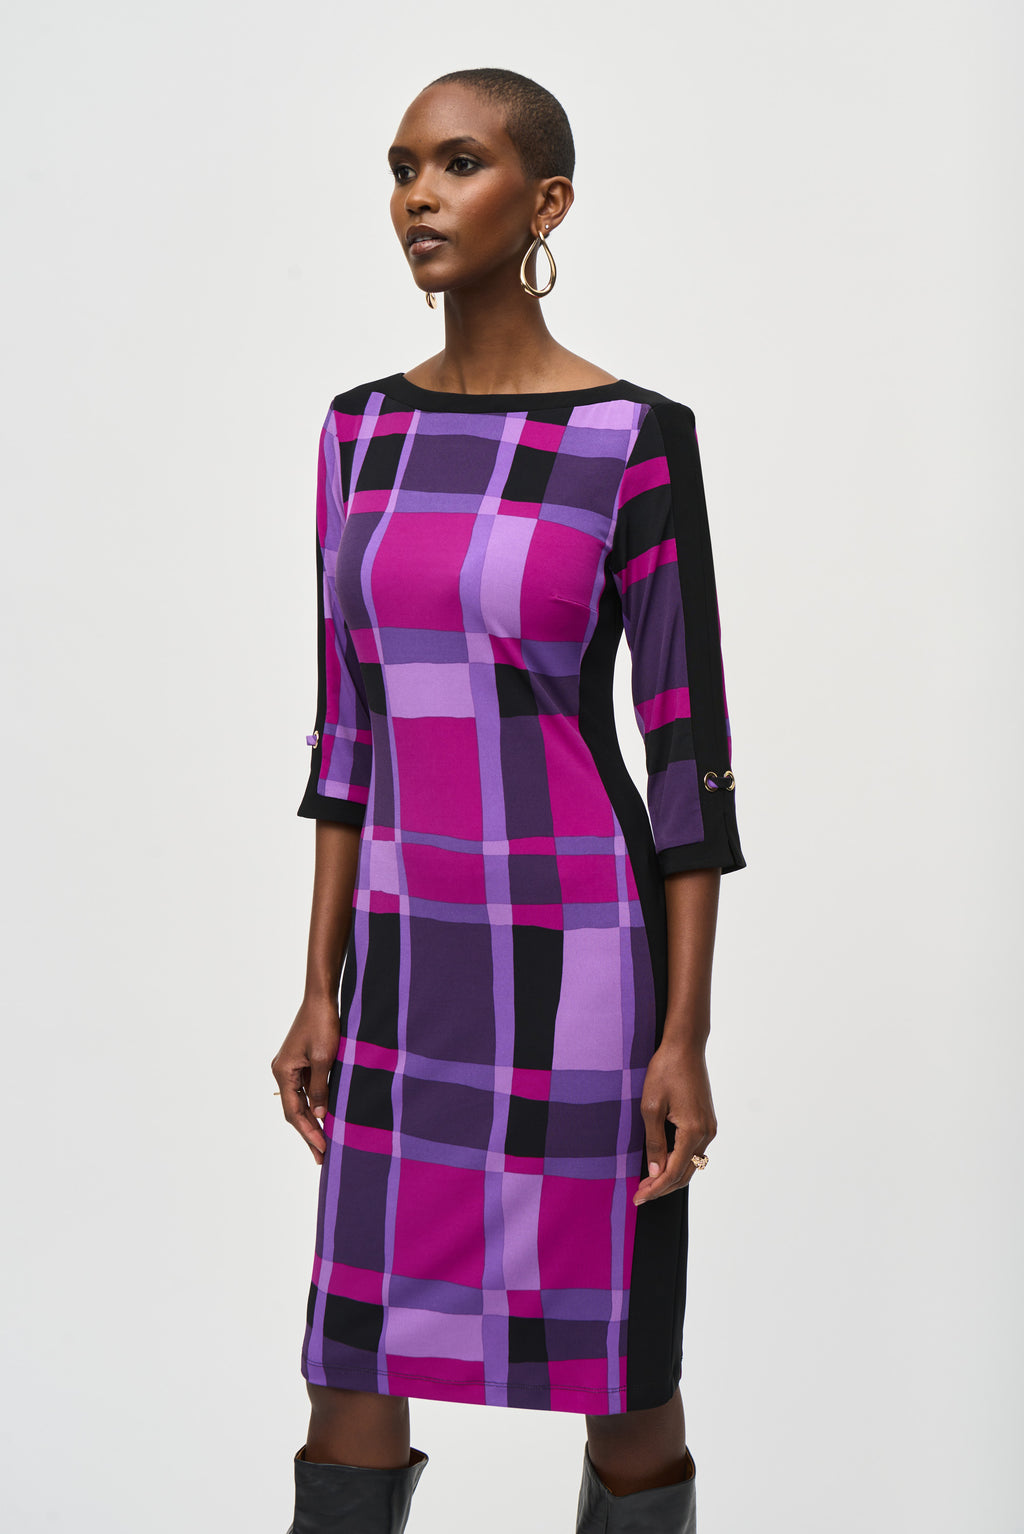 Joseph Ribkoff Purple/Black Plaid Print Sheath Dress Style 243301